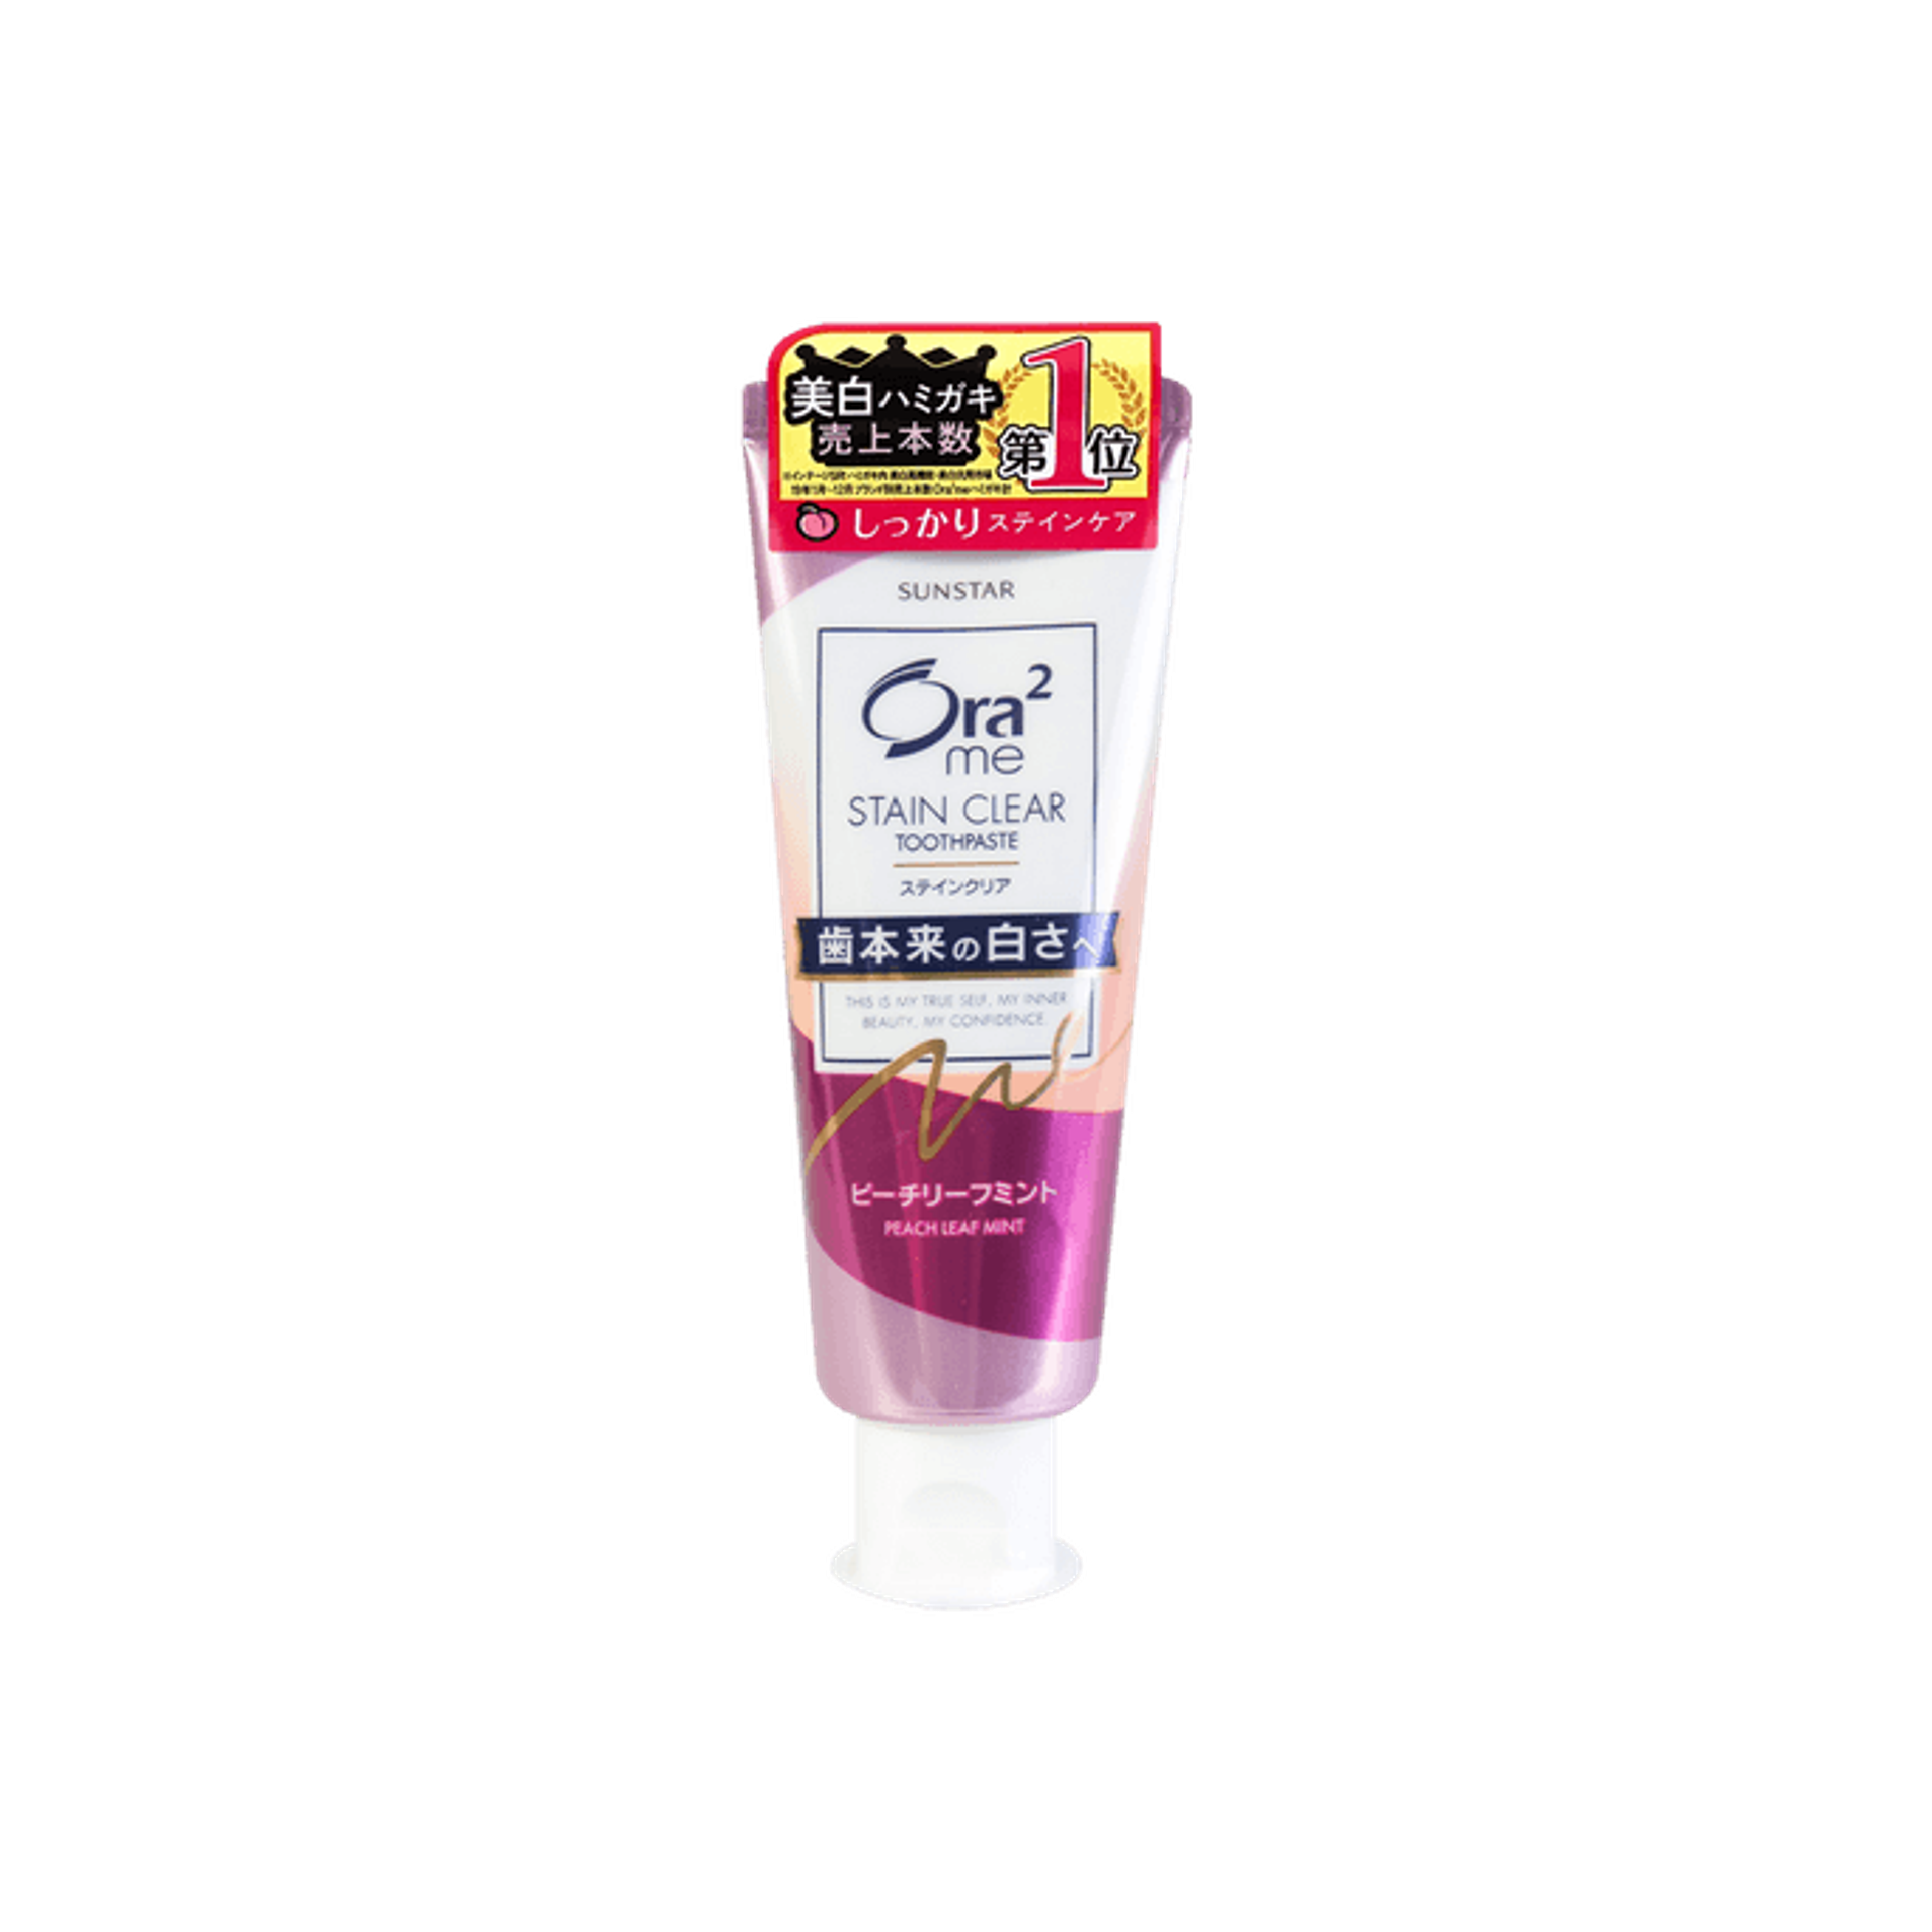 SUNSTAR ORA2 Ora2 Me Stain Clear Paste Toothpaste, 130g, Peach Leaf Mint | Yami